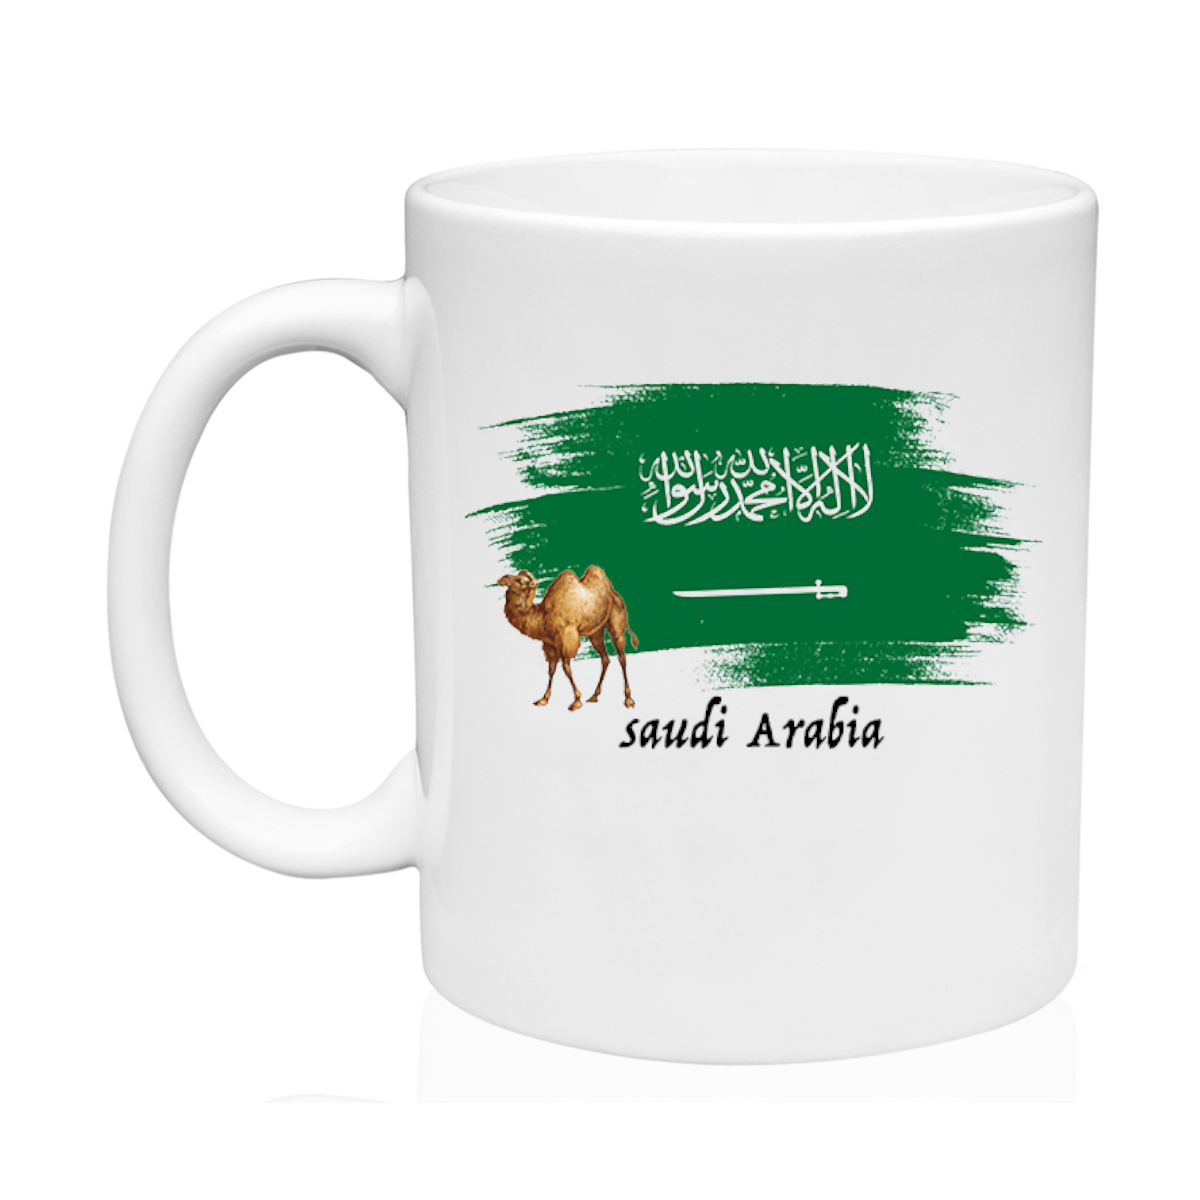 AGAD Turista (I Love Saudi Arabia Ceramic Mug)